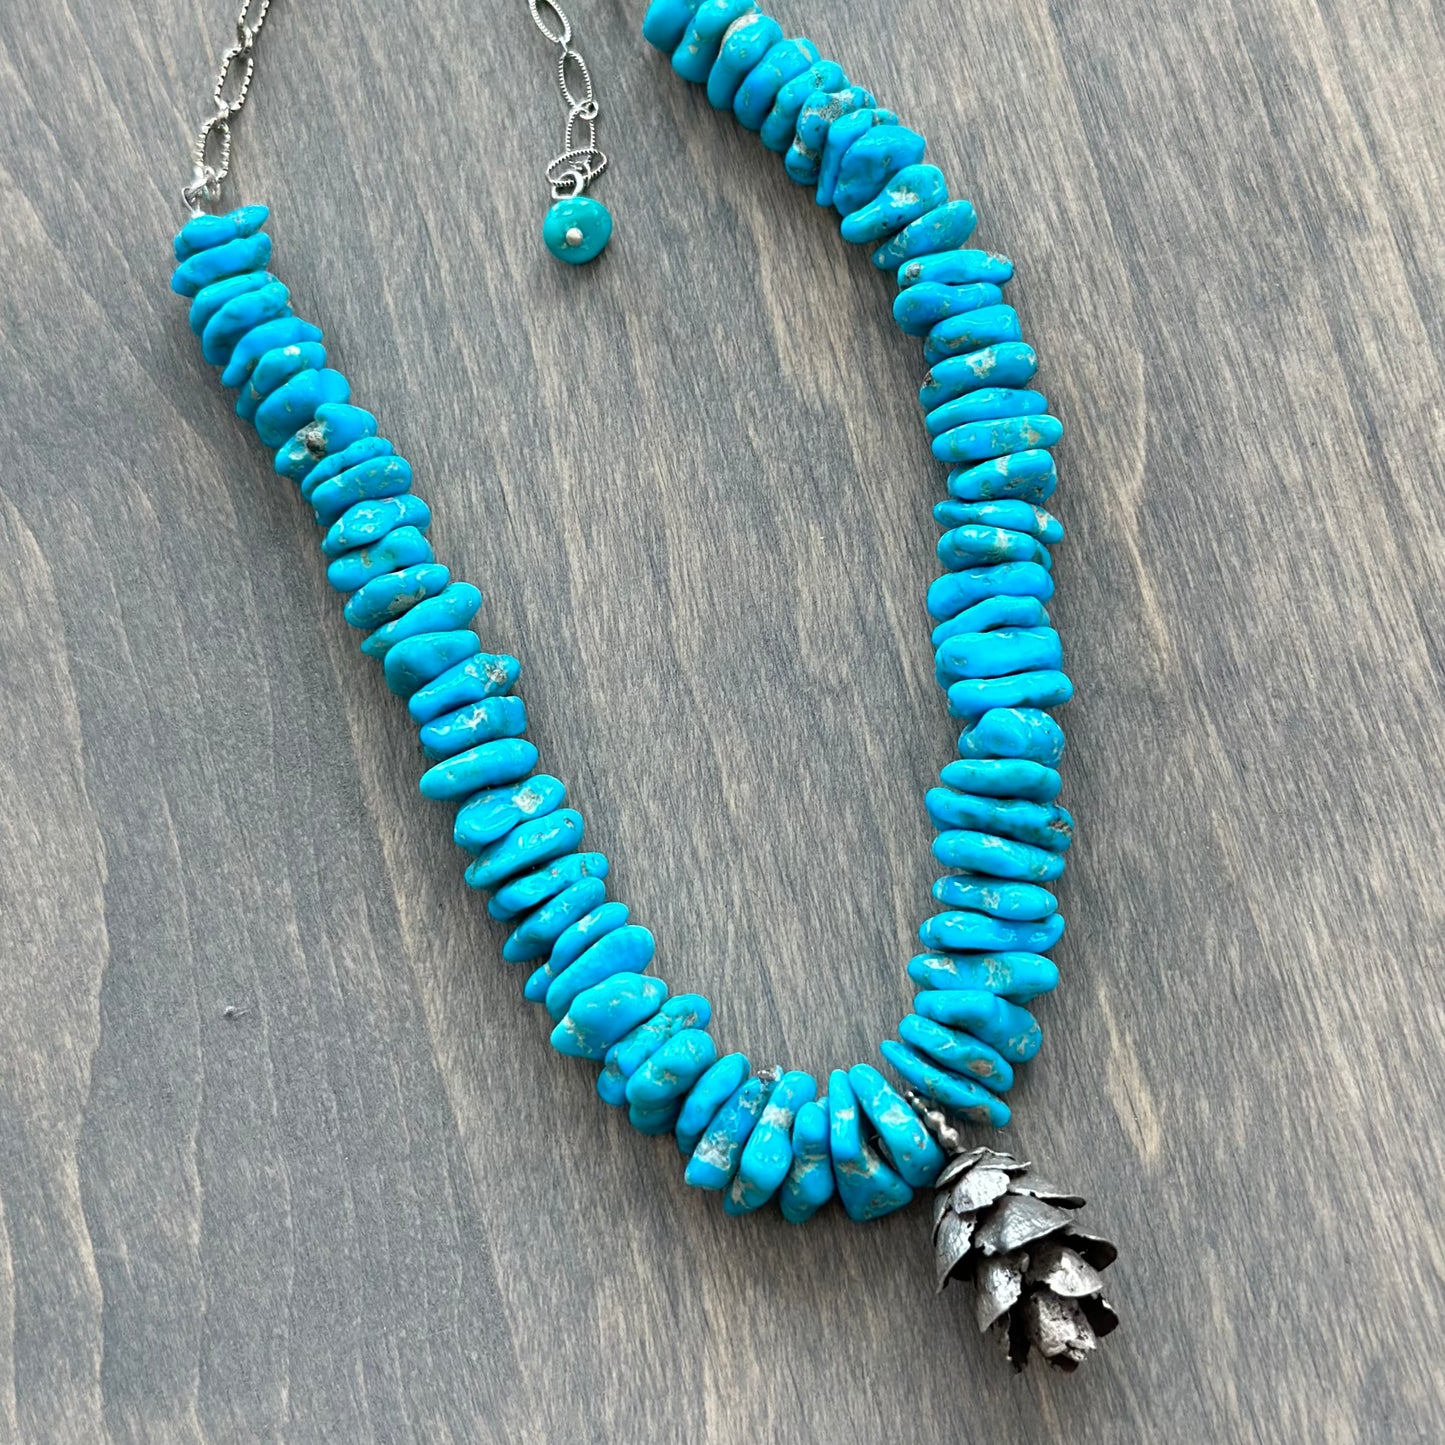 Hemlock Cone Necklace with Kingman Turquoise Beads